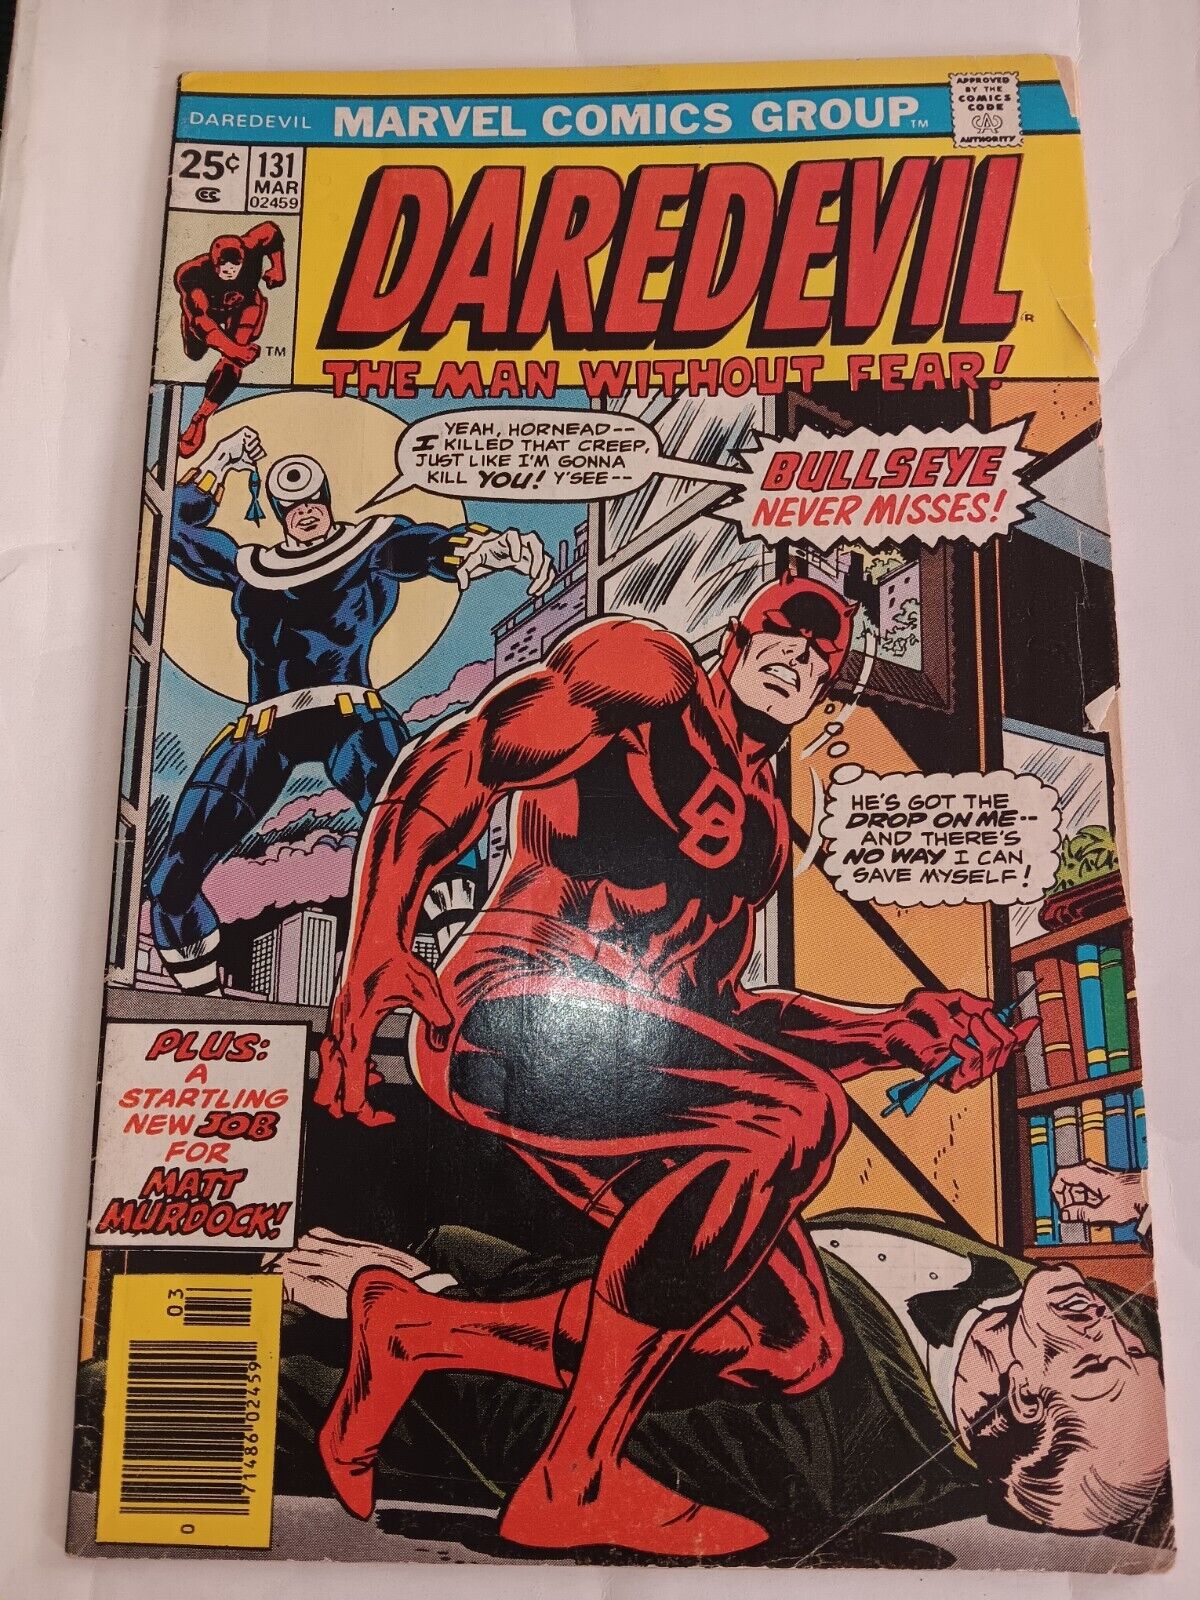 Daredevil #131 (1976 Marvel Comics) - Origin and 🔥1st Appearance Bullseye